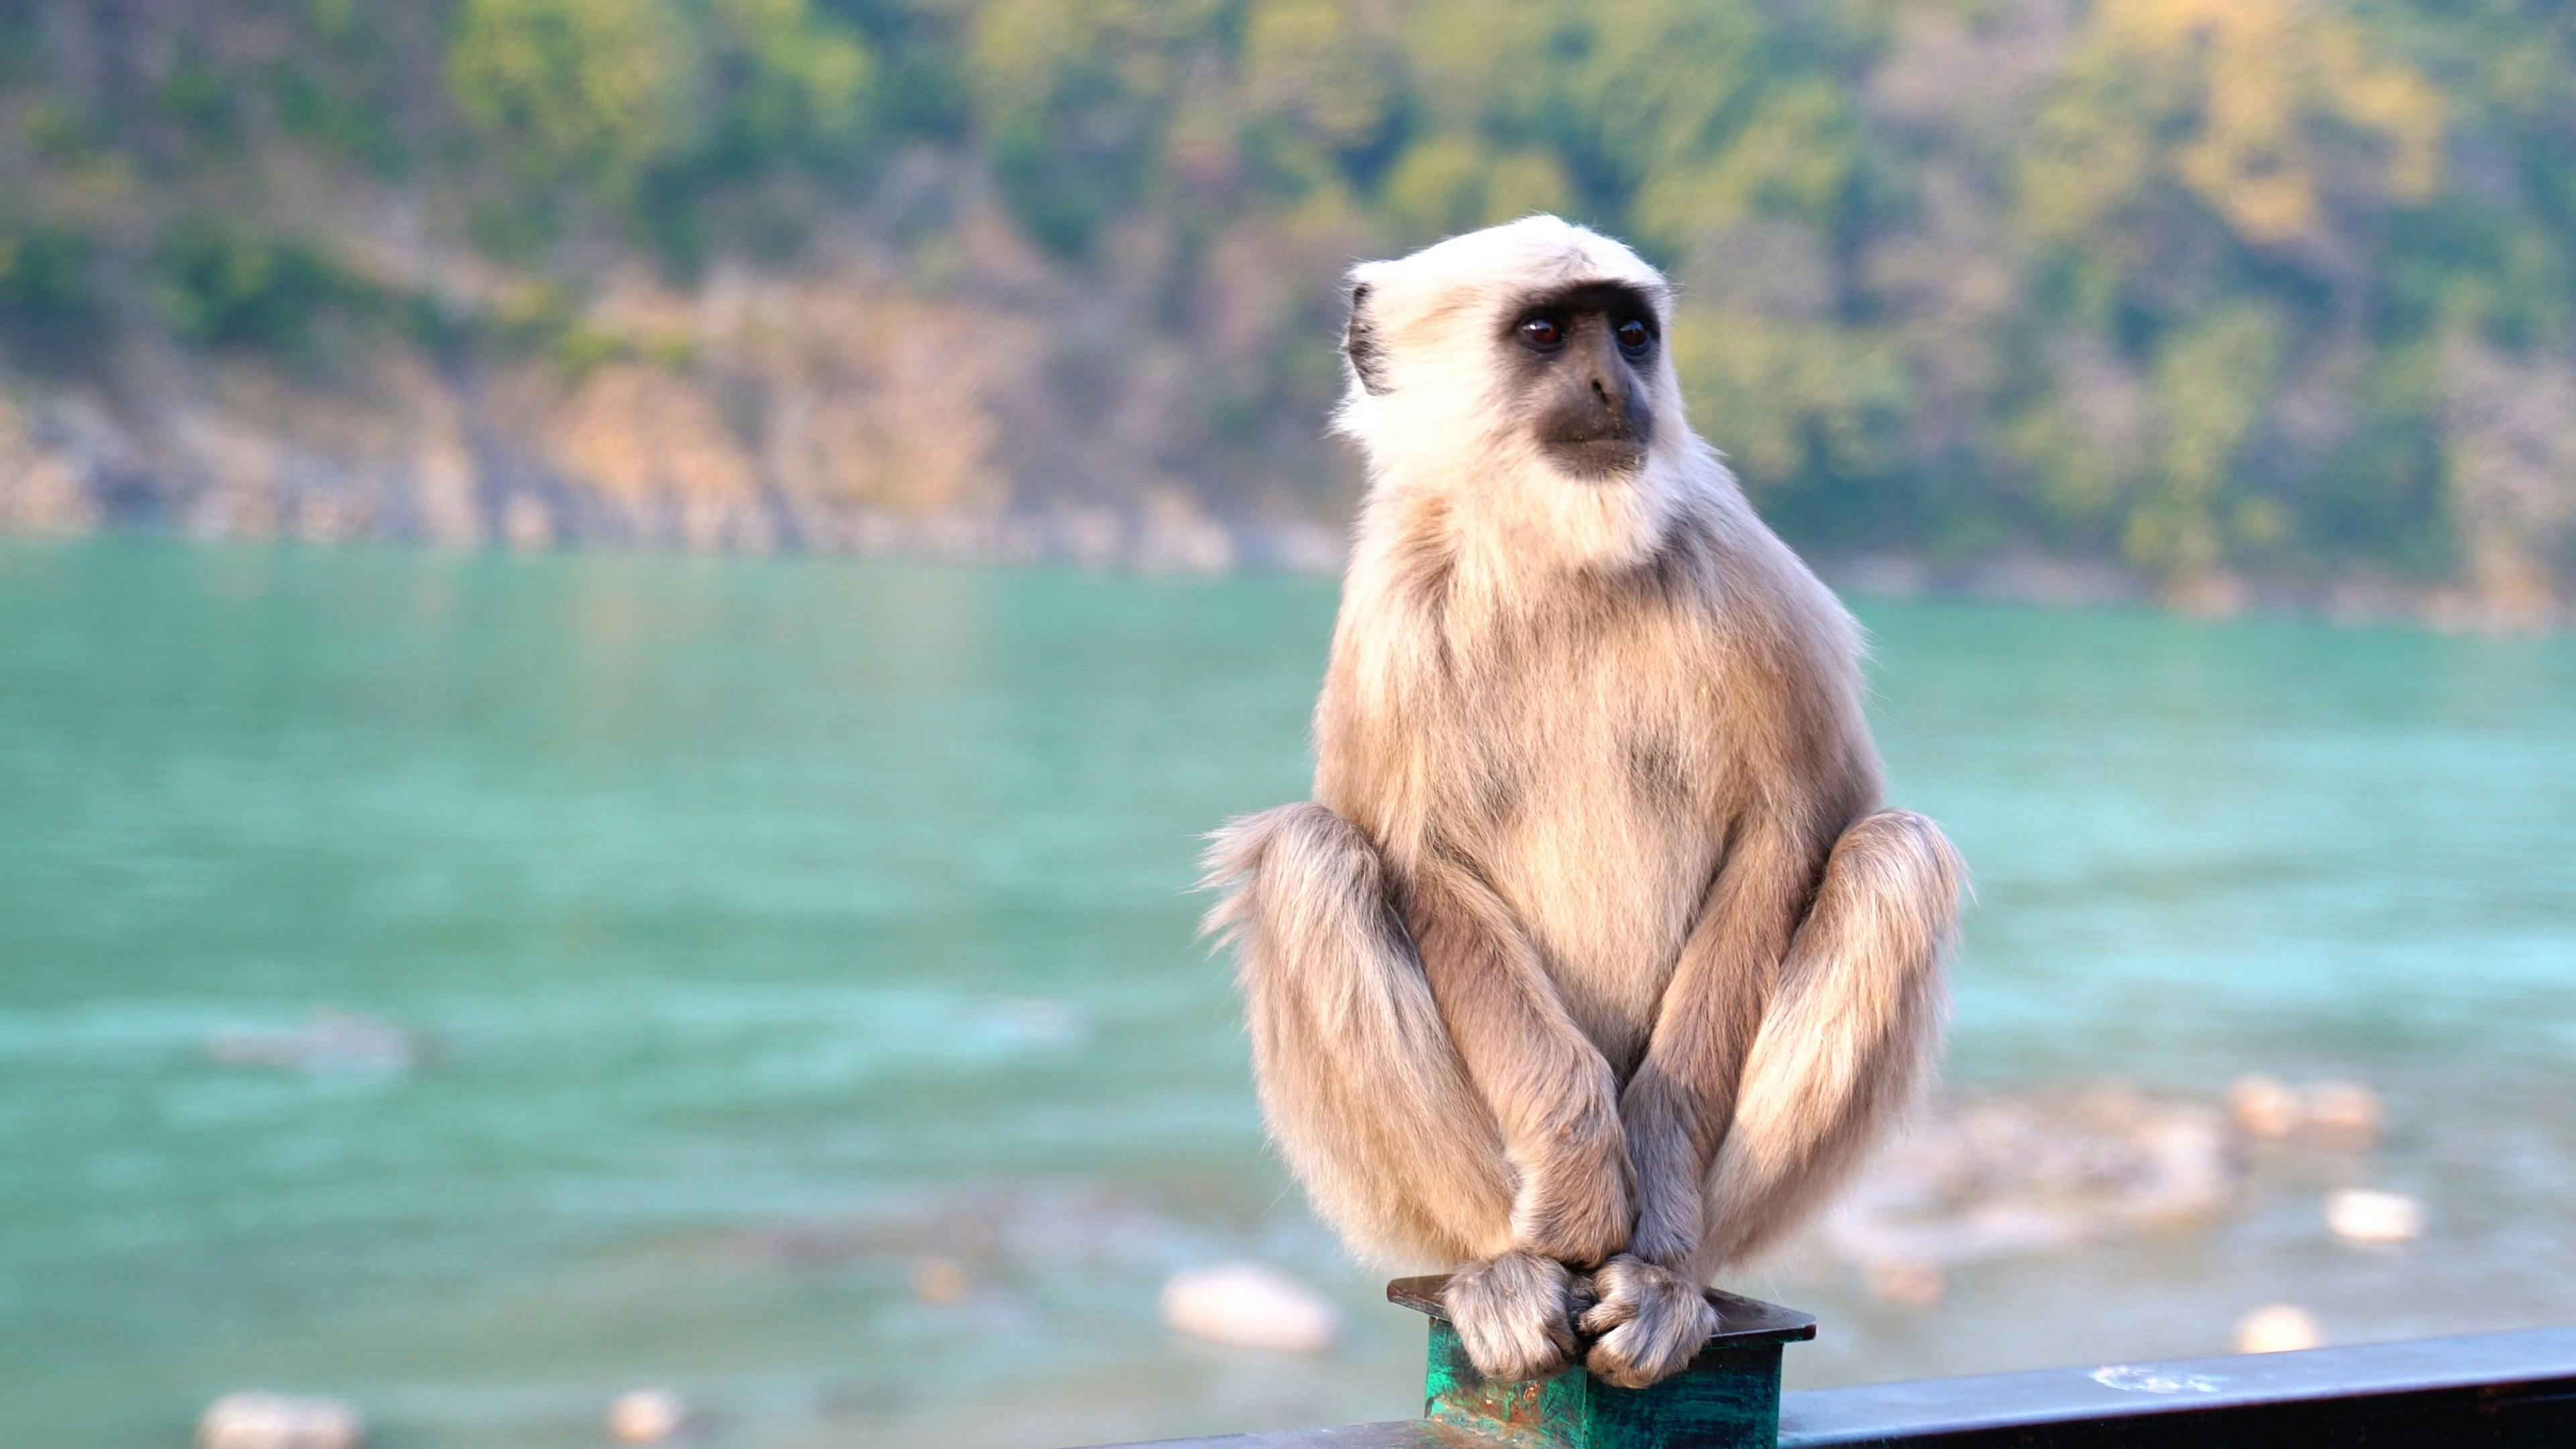 Hanumanasana: Stretch and Soar with Monkey Pose | Yoga World - Yoga - How  to do Monkey Pose - YouTube